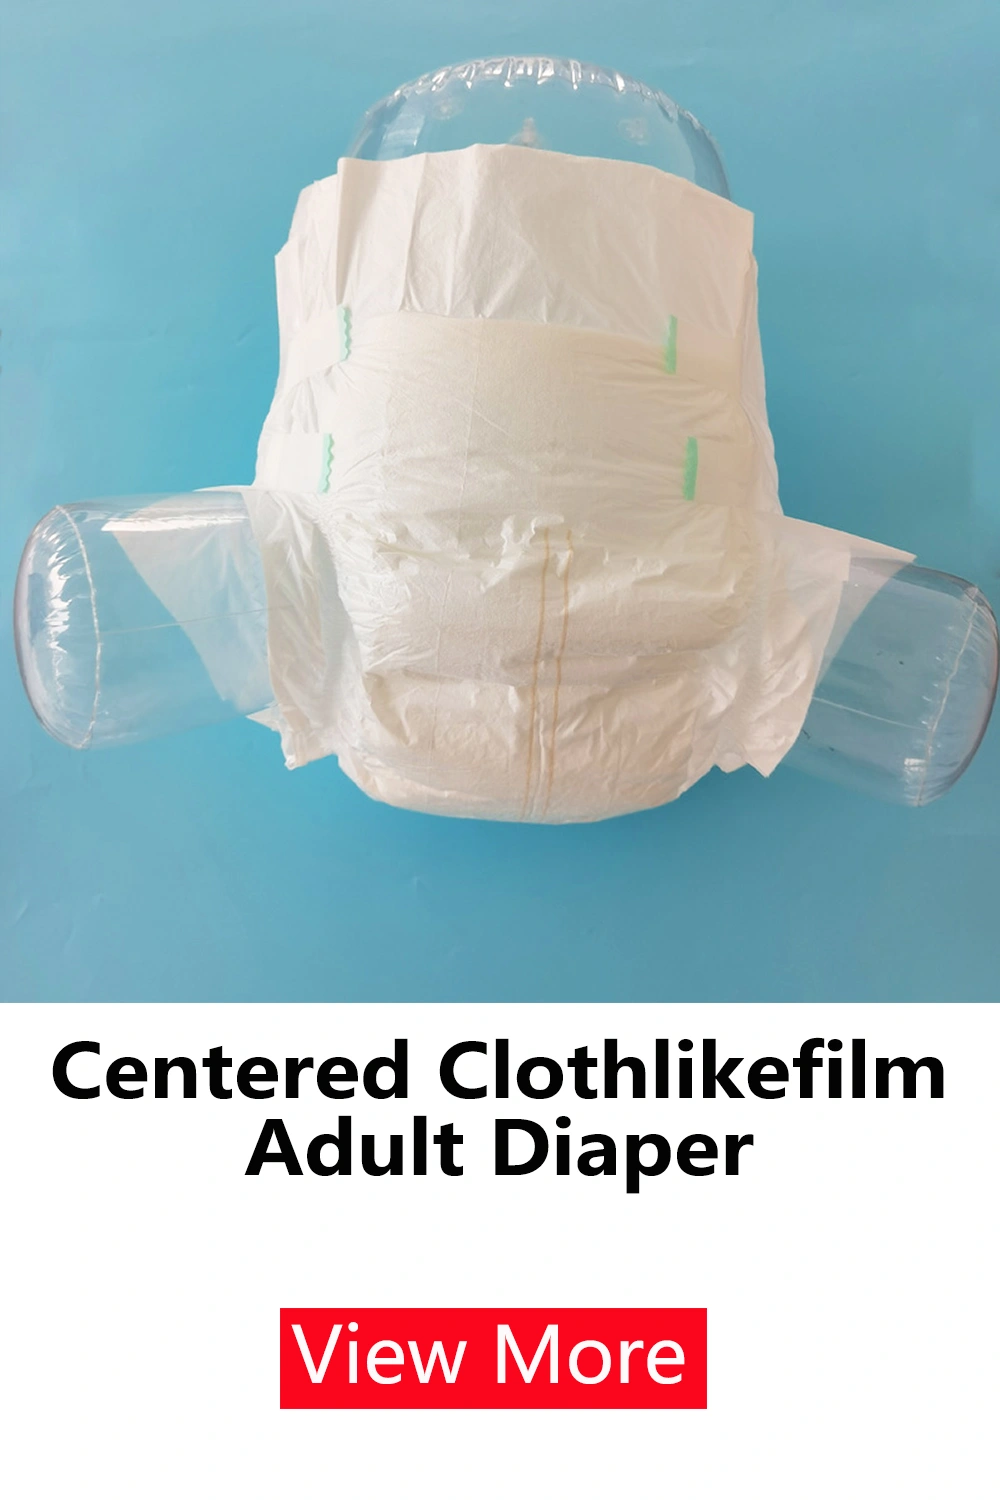 Centered clothlikefilm adult diaper picture adult diaper